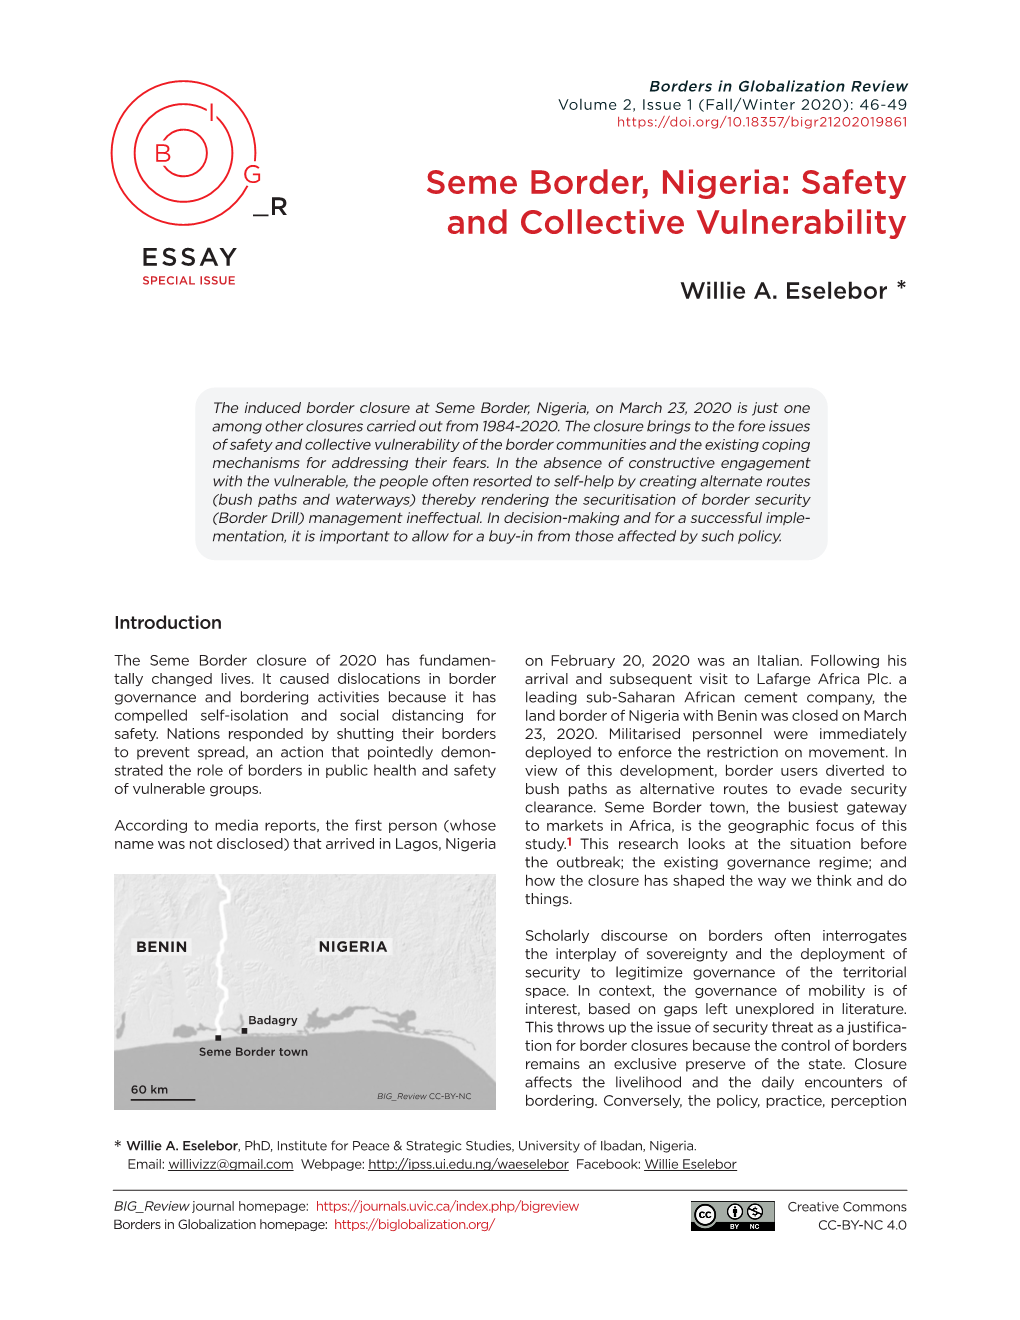 Seme Border, Nigeria: Safety and Collective Vulnerability”